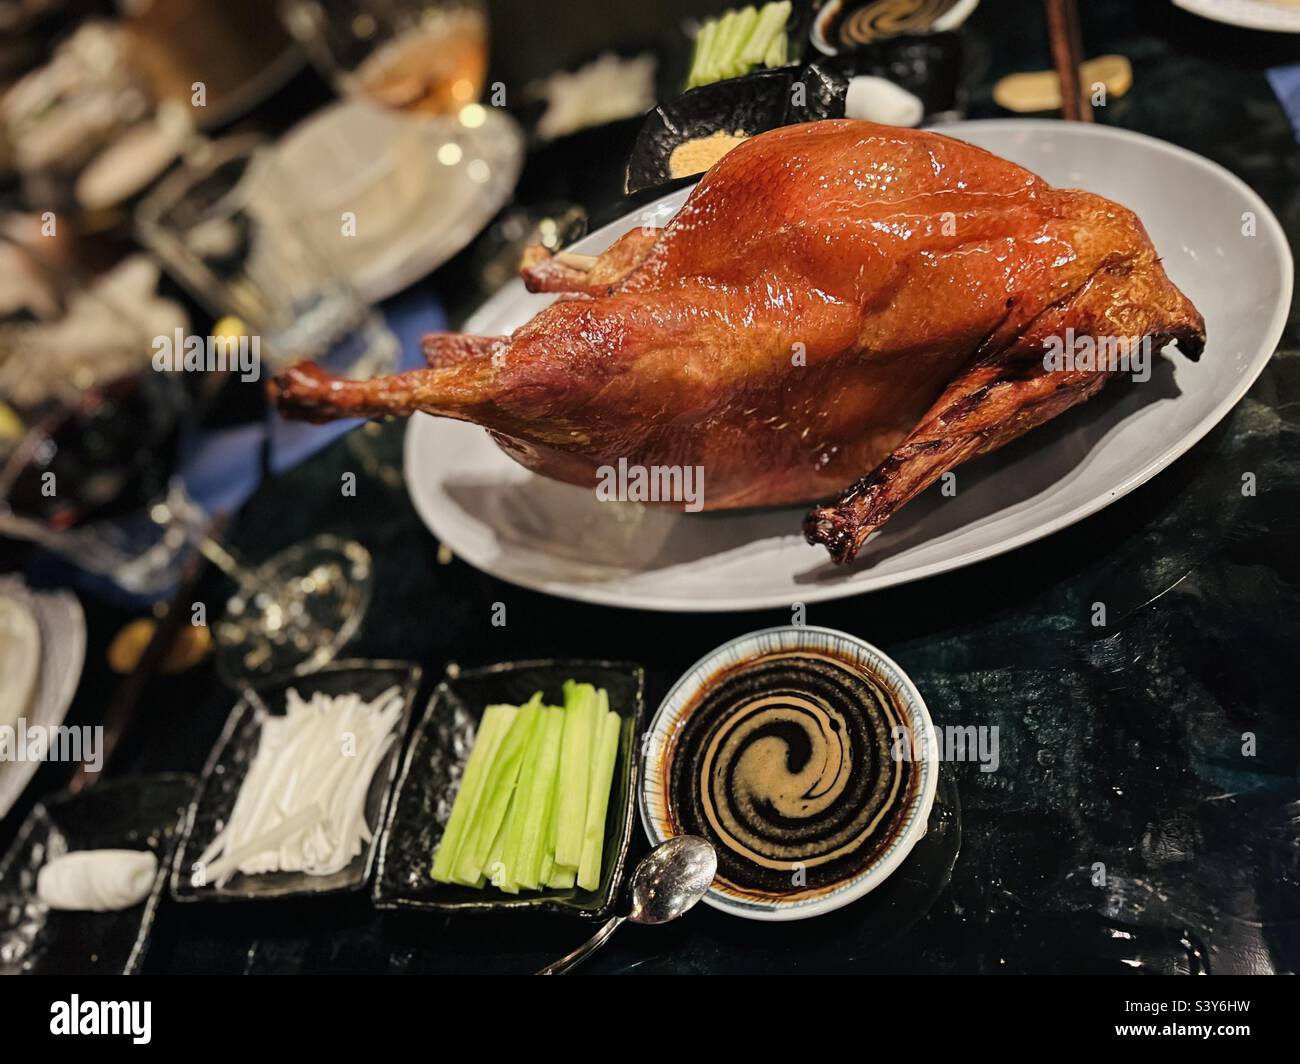 Peking duck at a restaurant Stock Photo